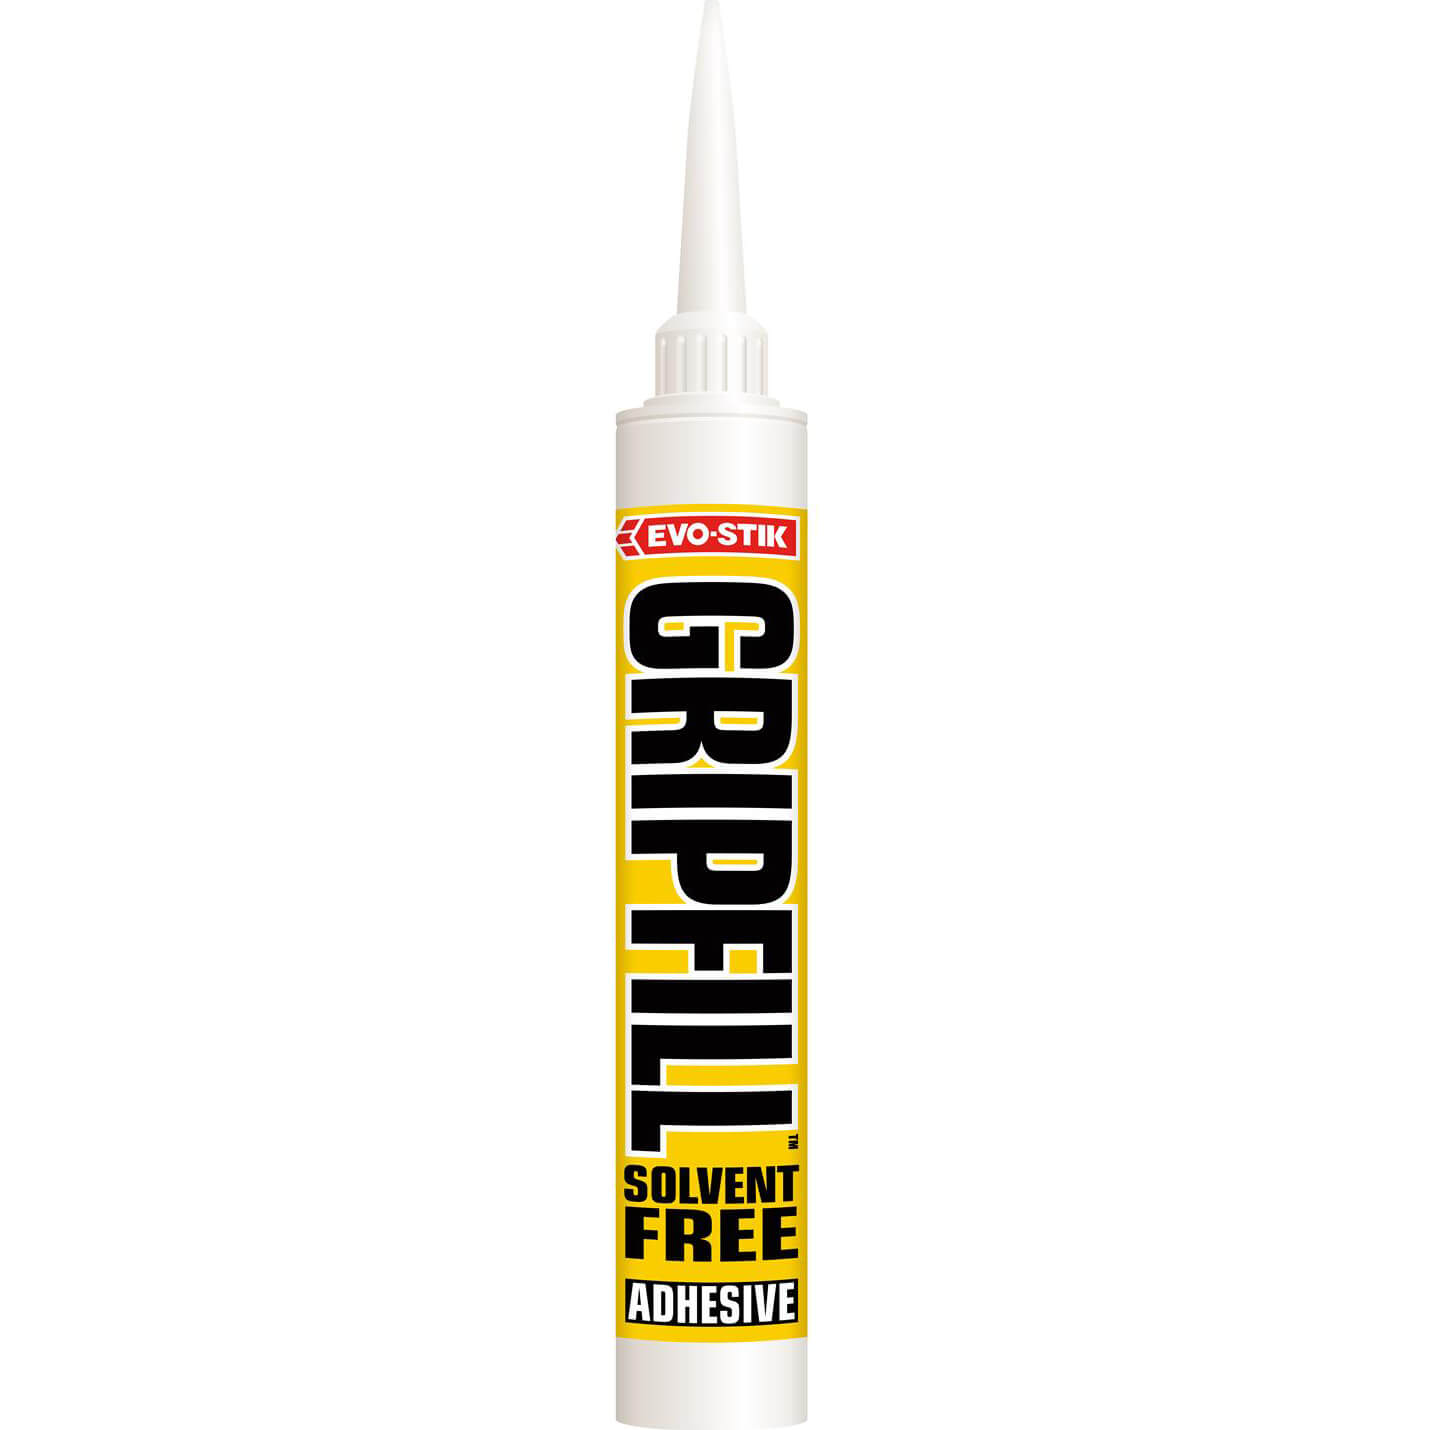 Evotik Gripfill Solvent Free Grab Adhesive Yellow 310ml